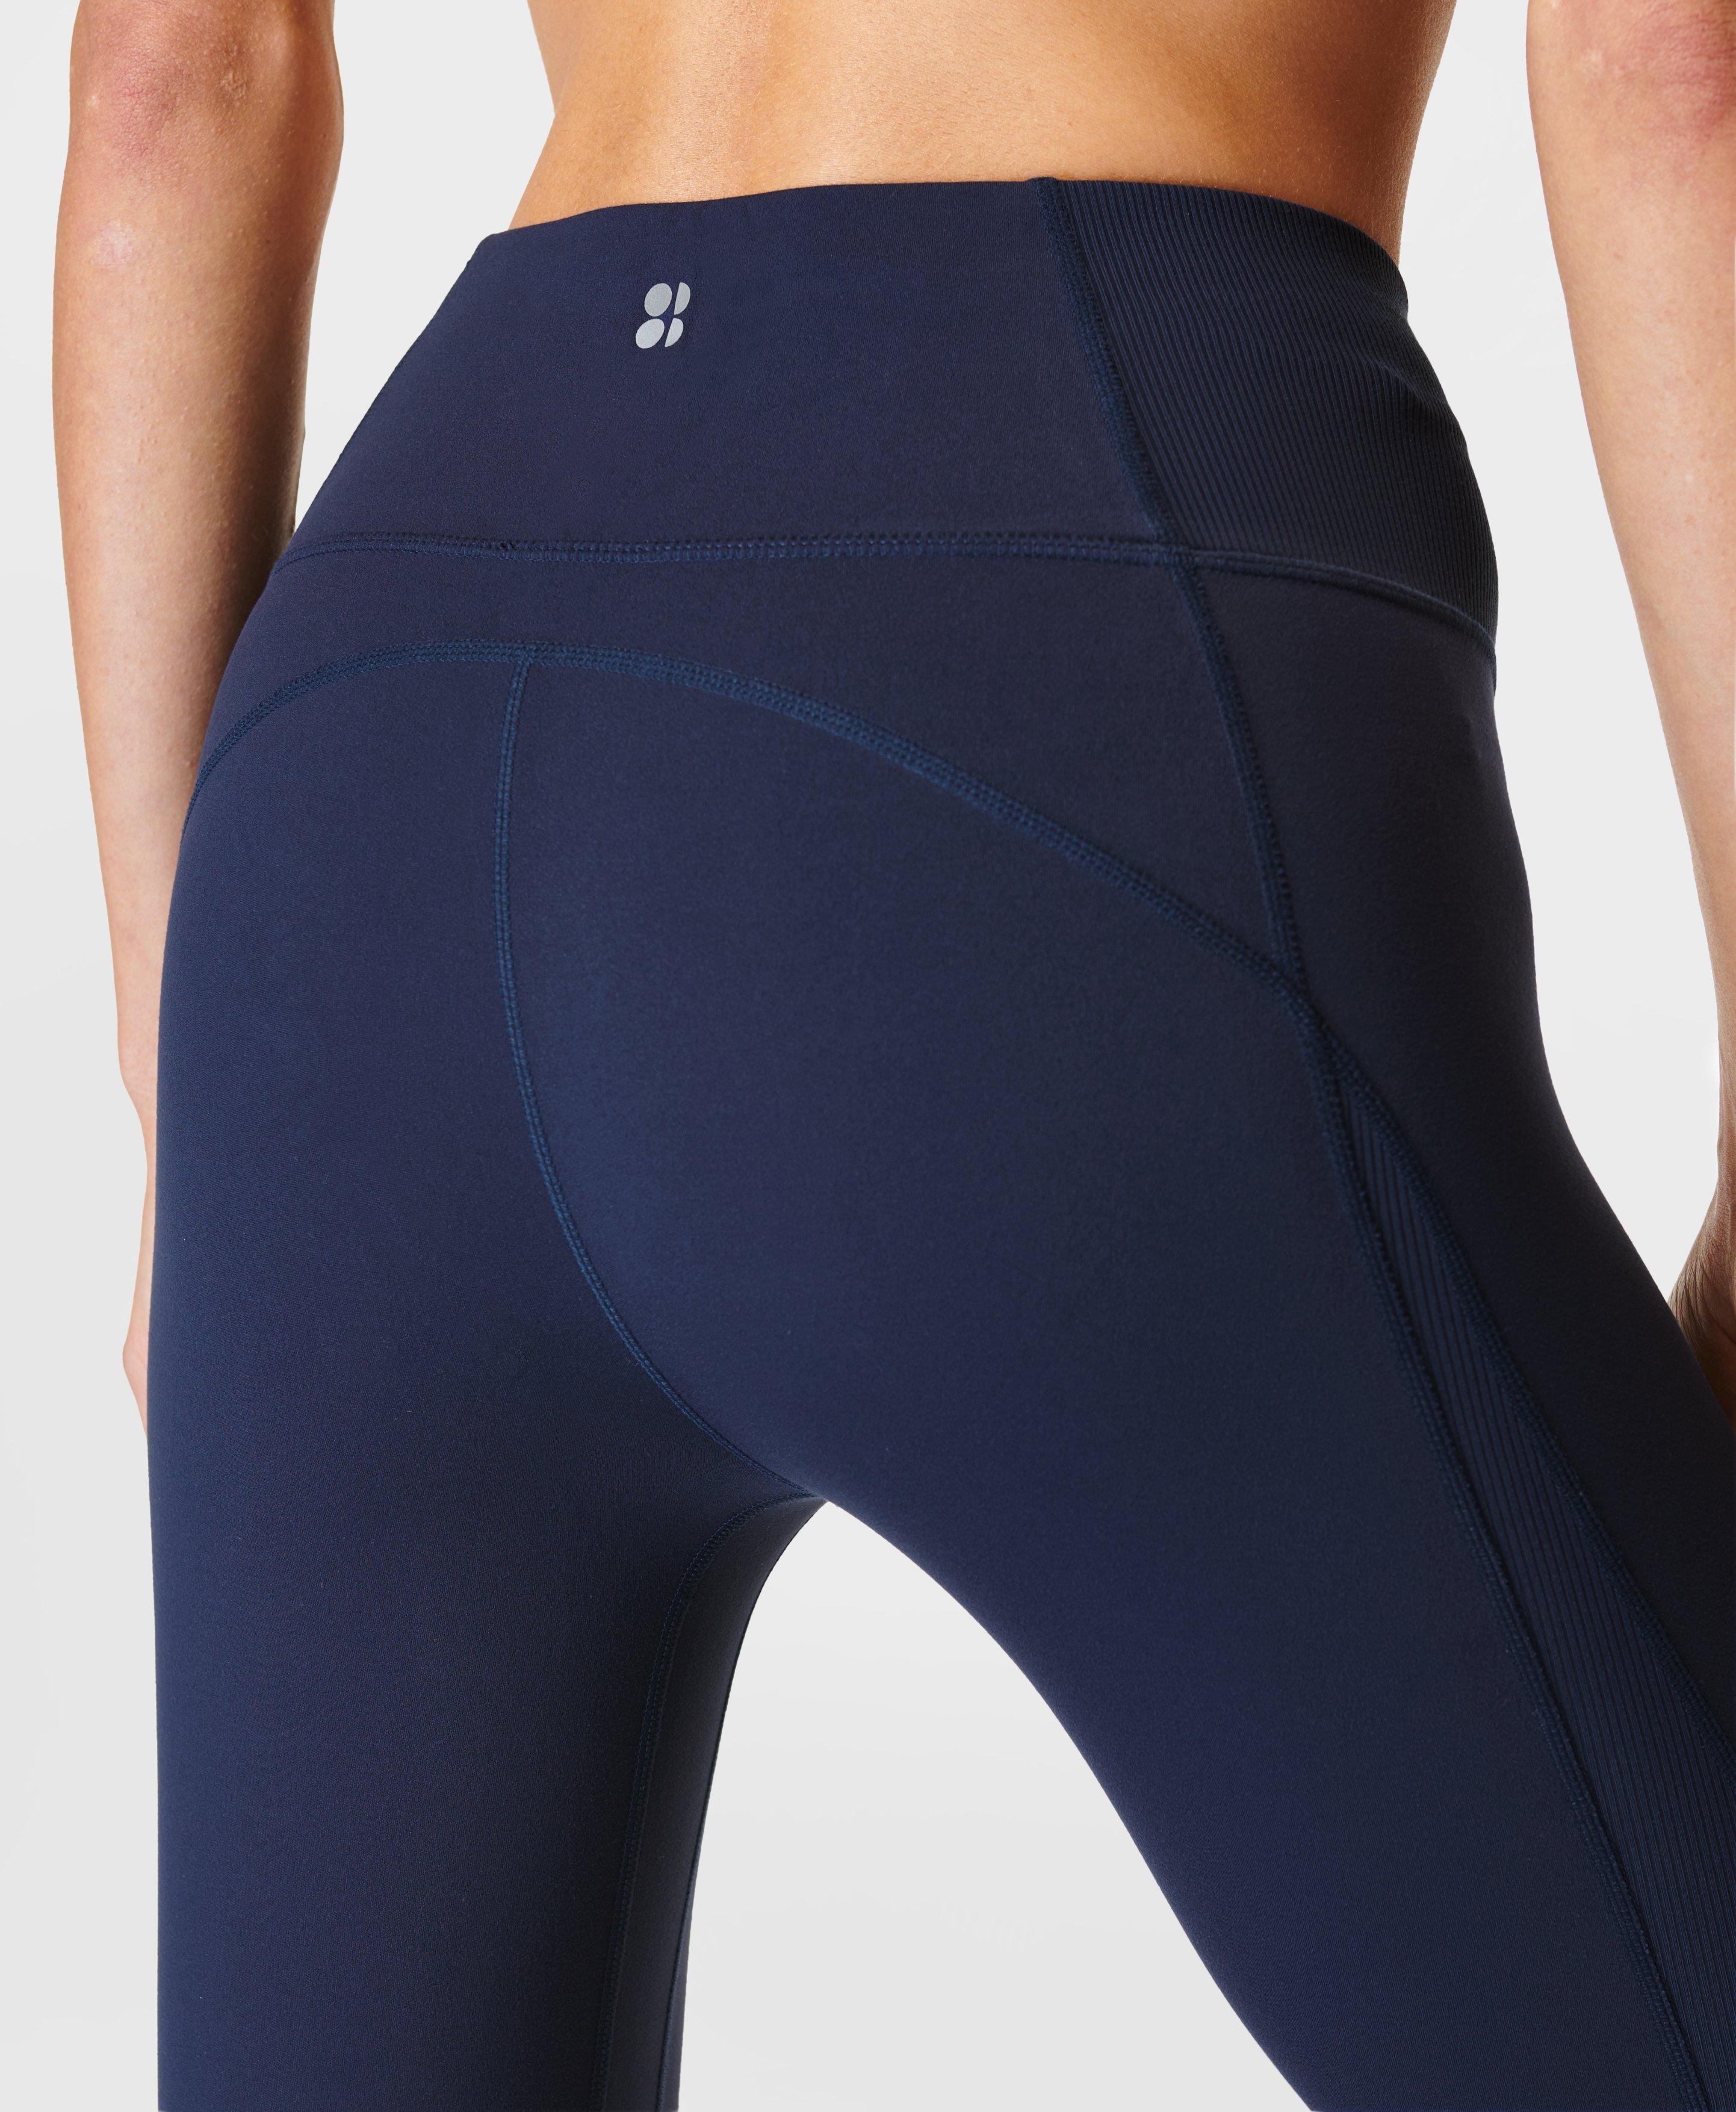 RBX womens S navy blue nylon blend stretch leggings athletic a3